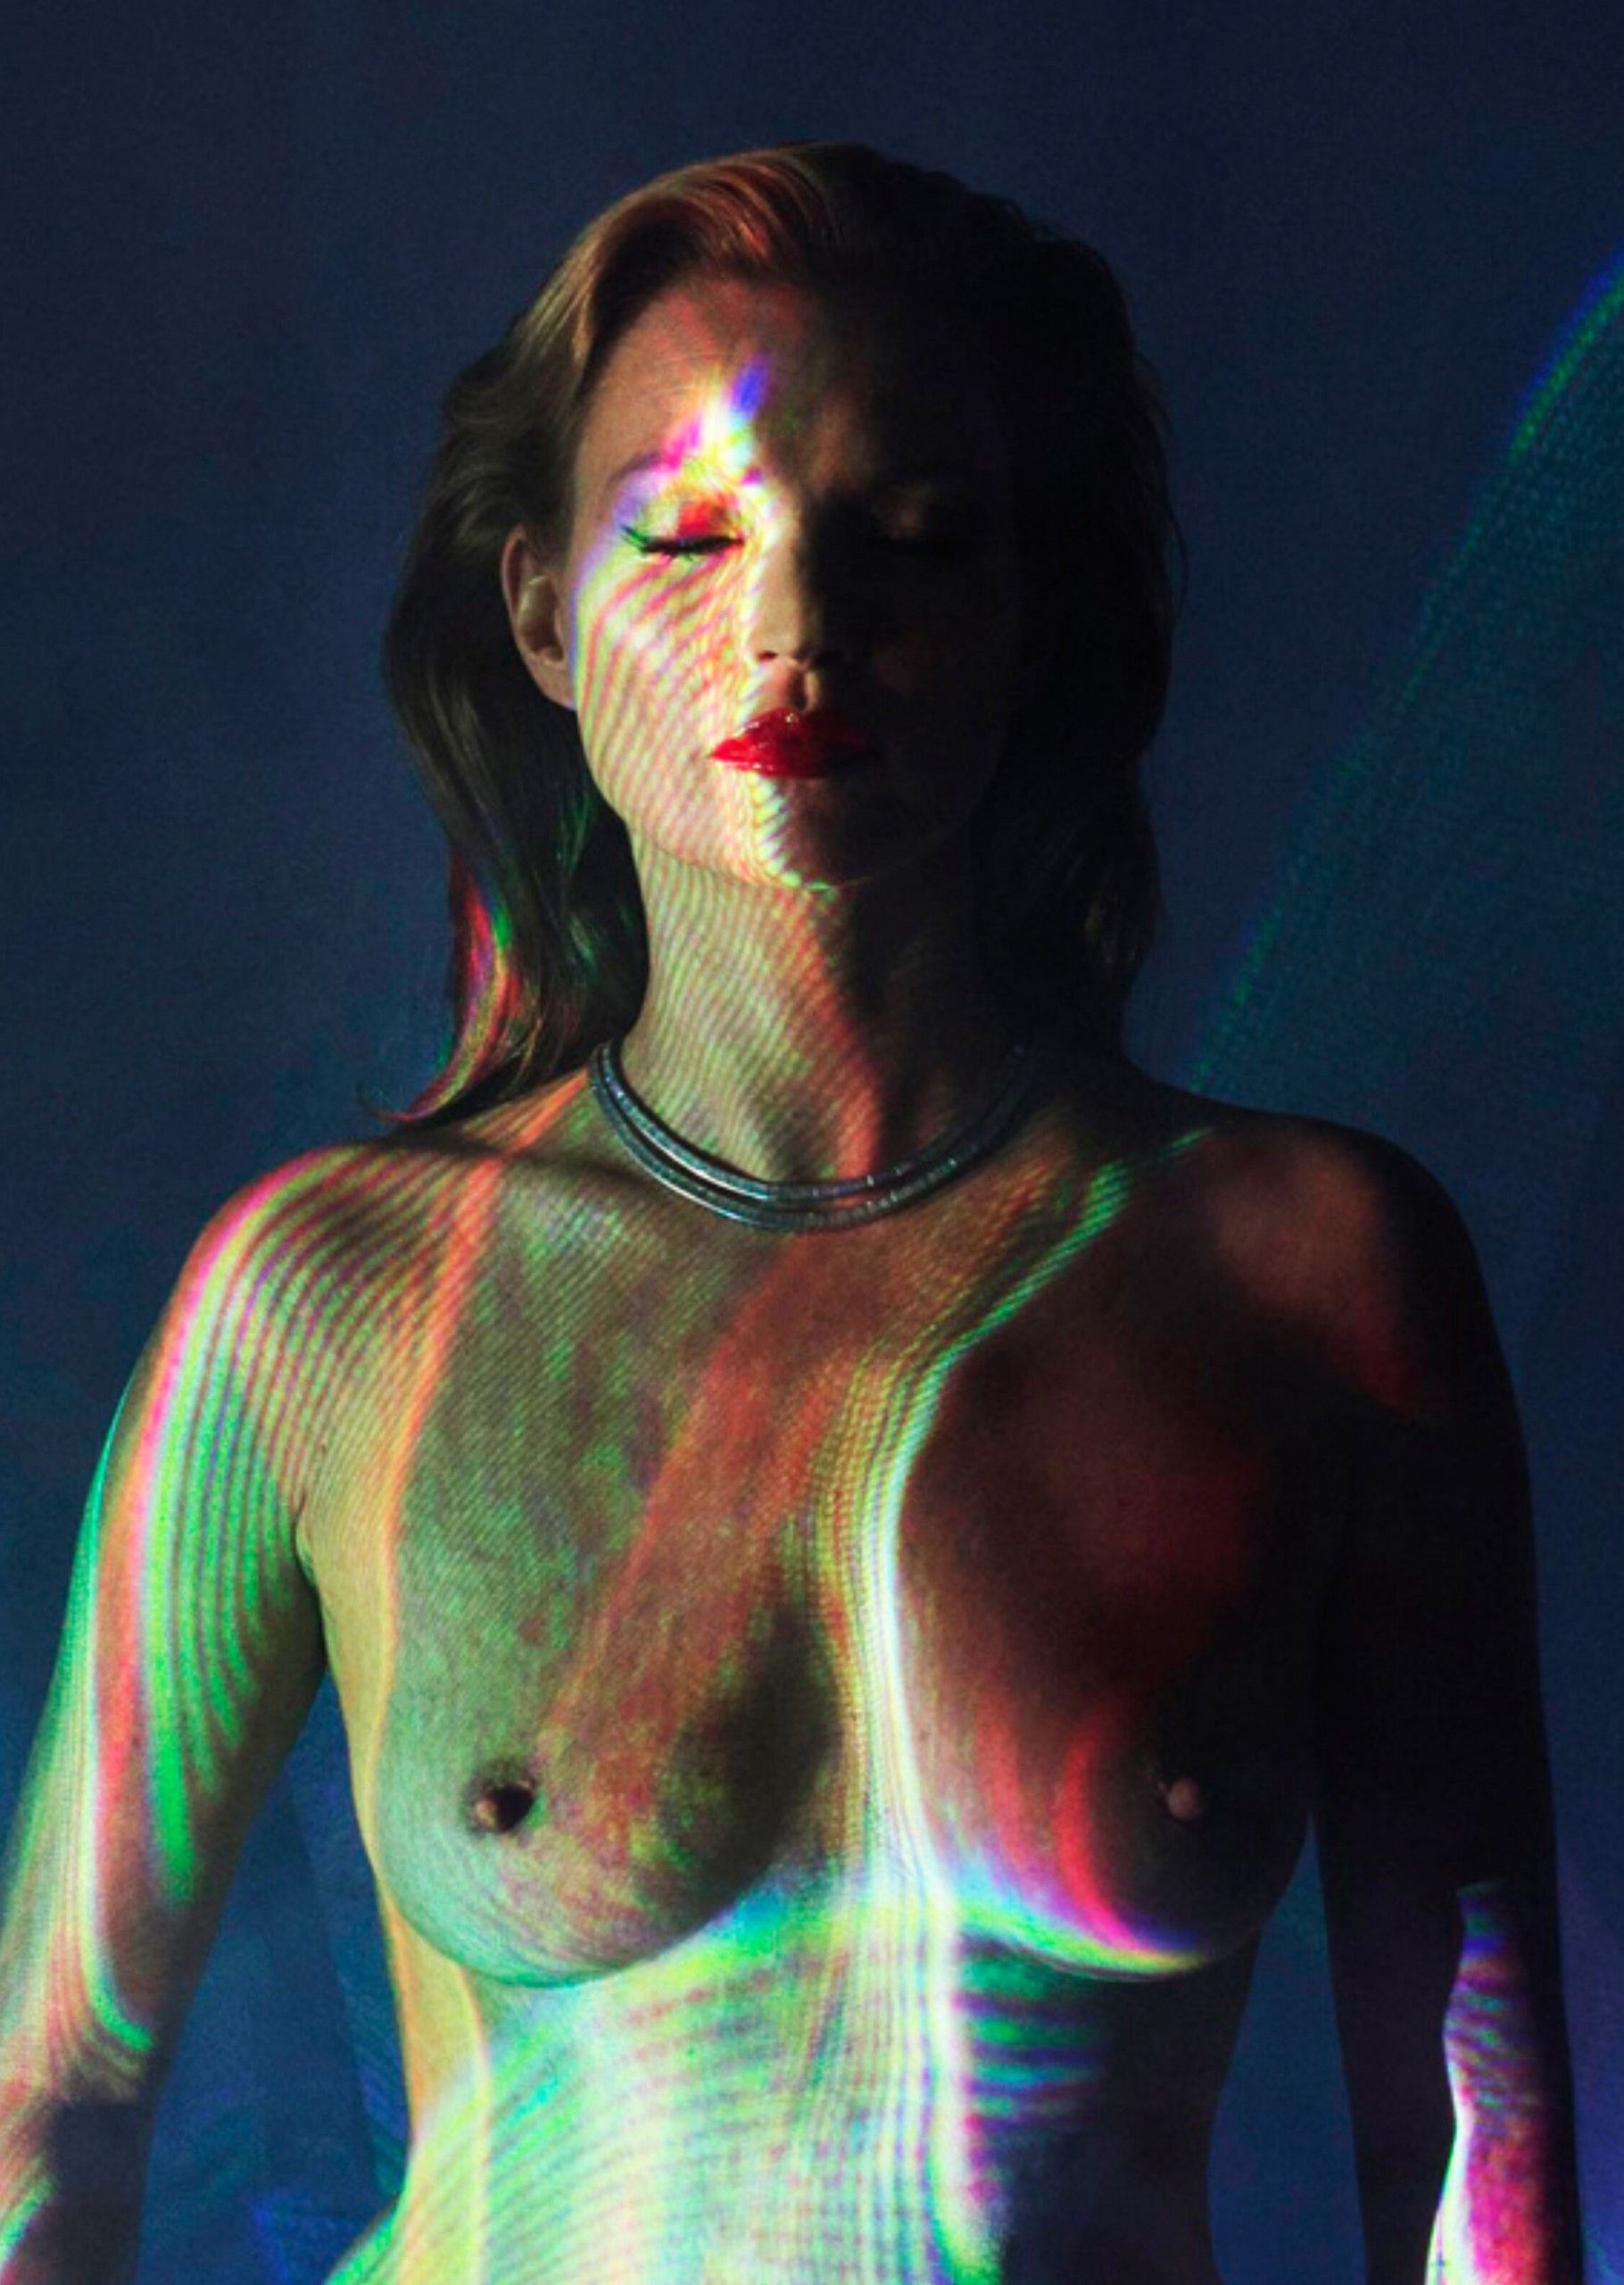 She's Light (Laser 2) by Chris Levine